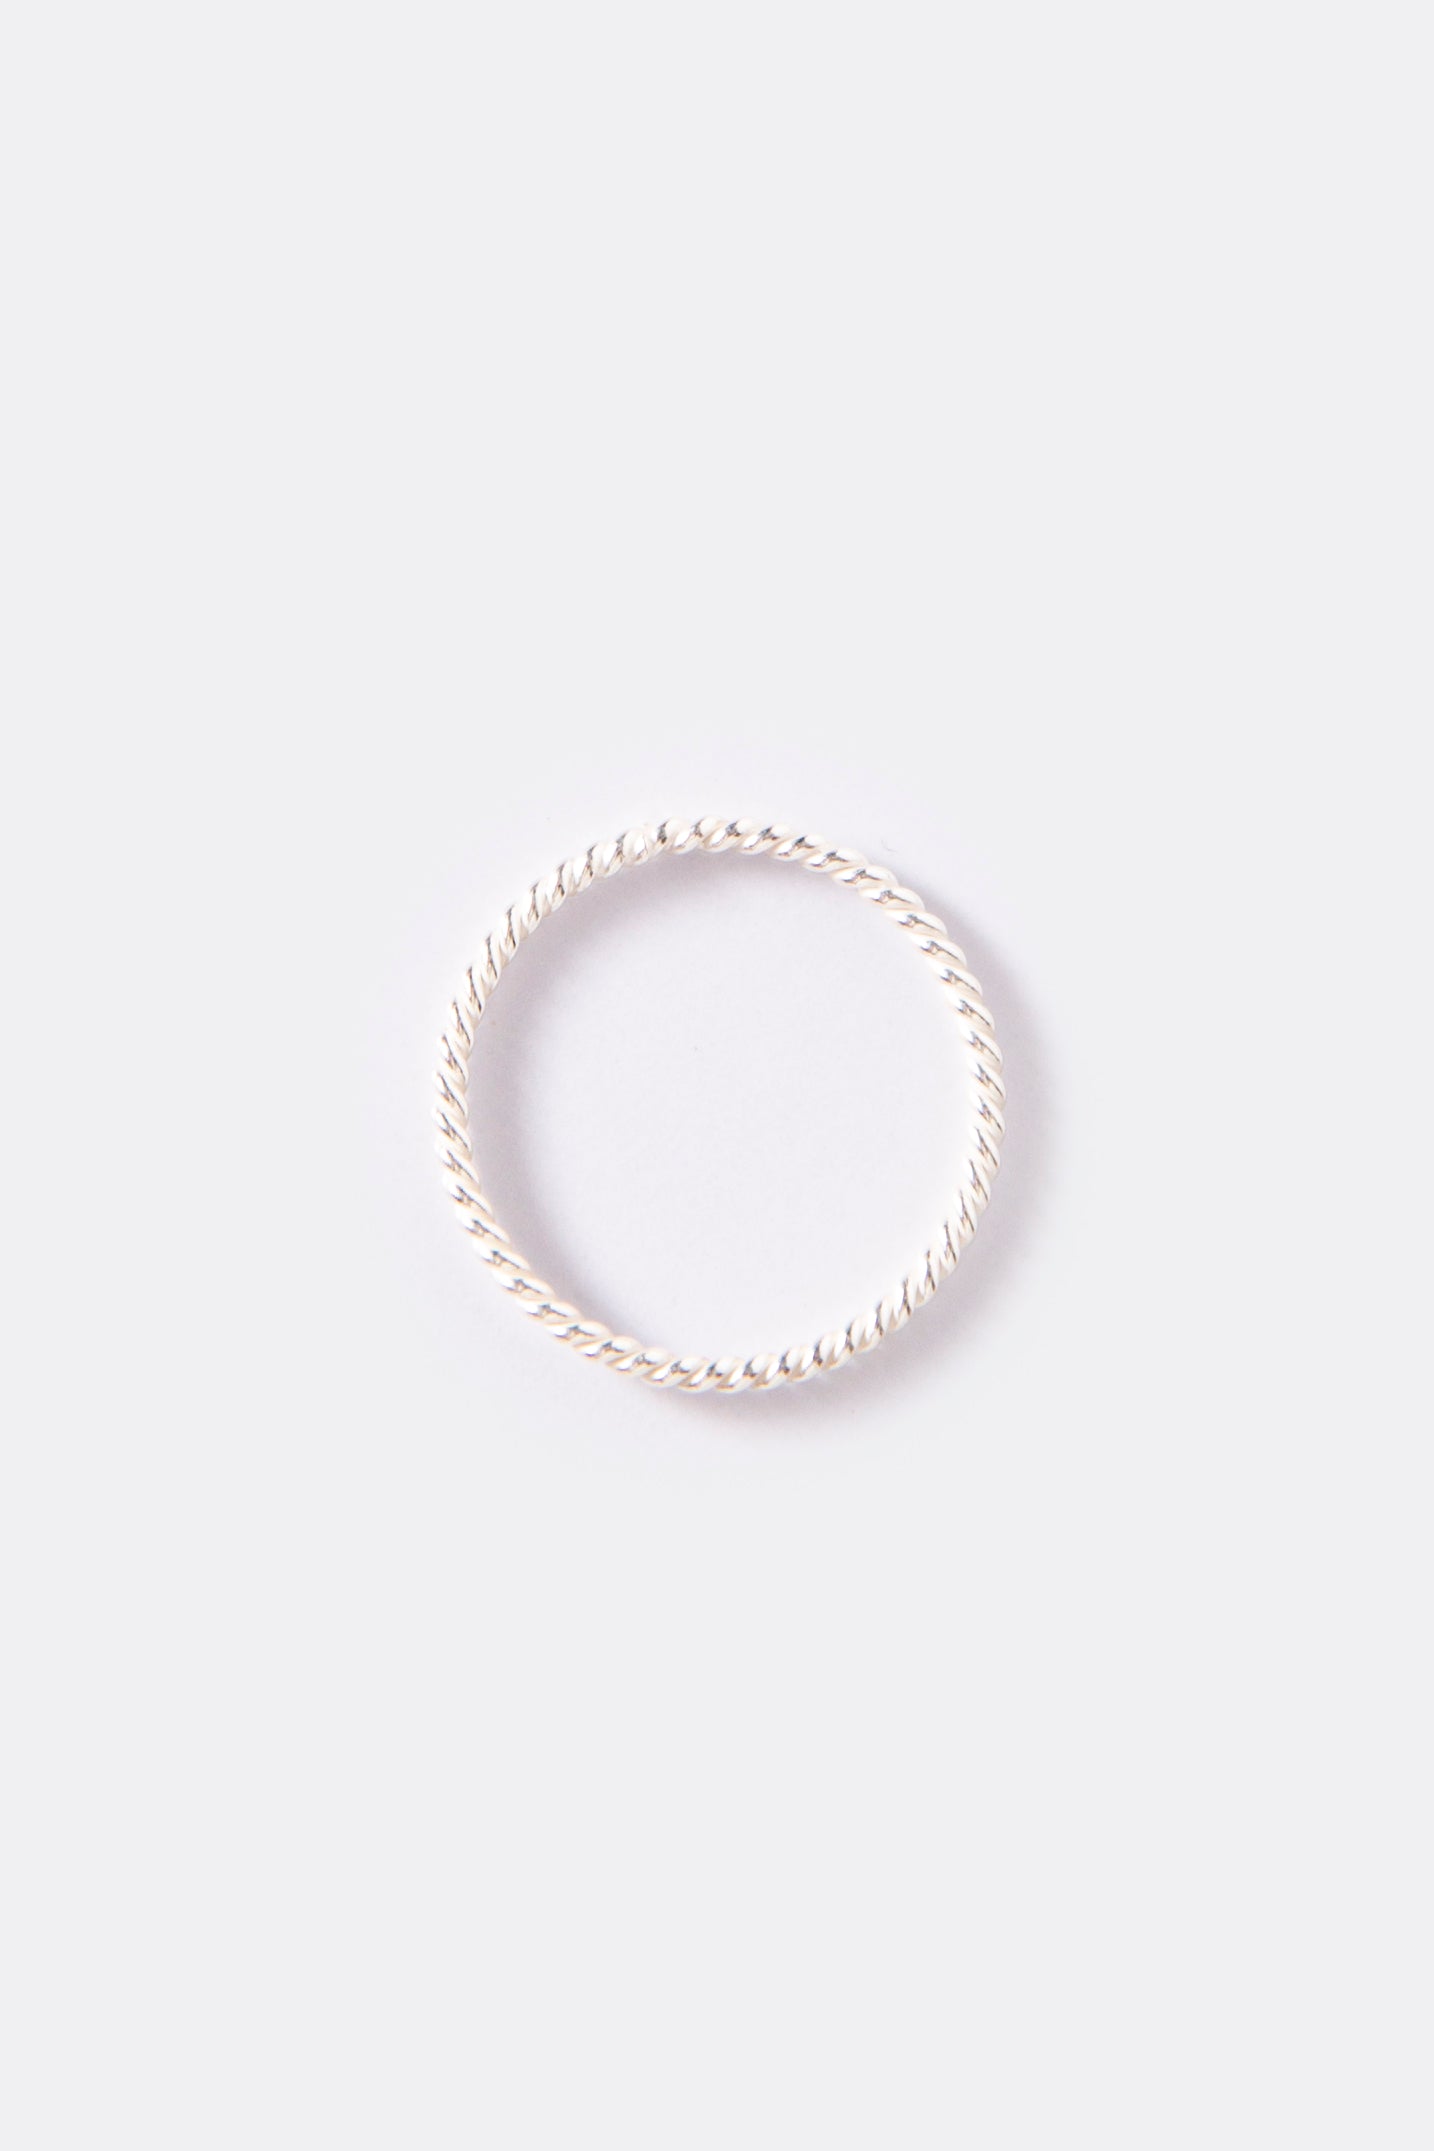 #anello #ring #argento #silver #fedina #torchon